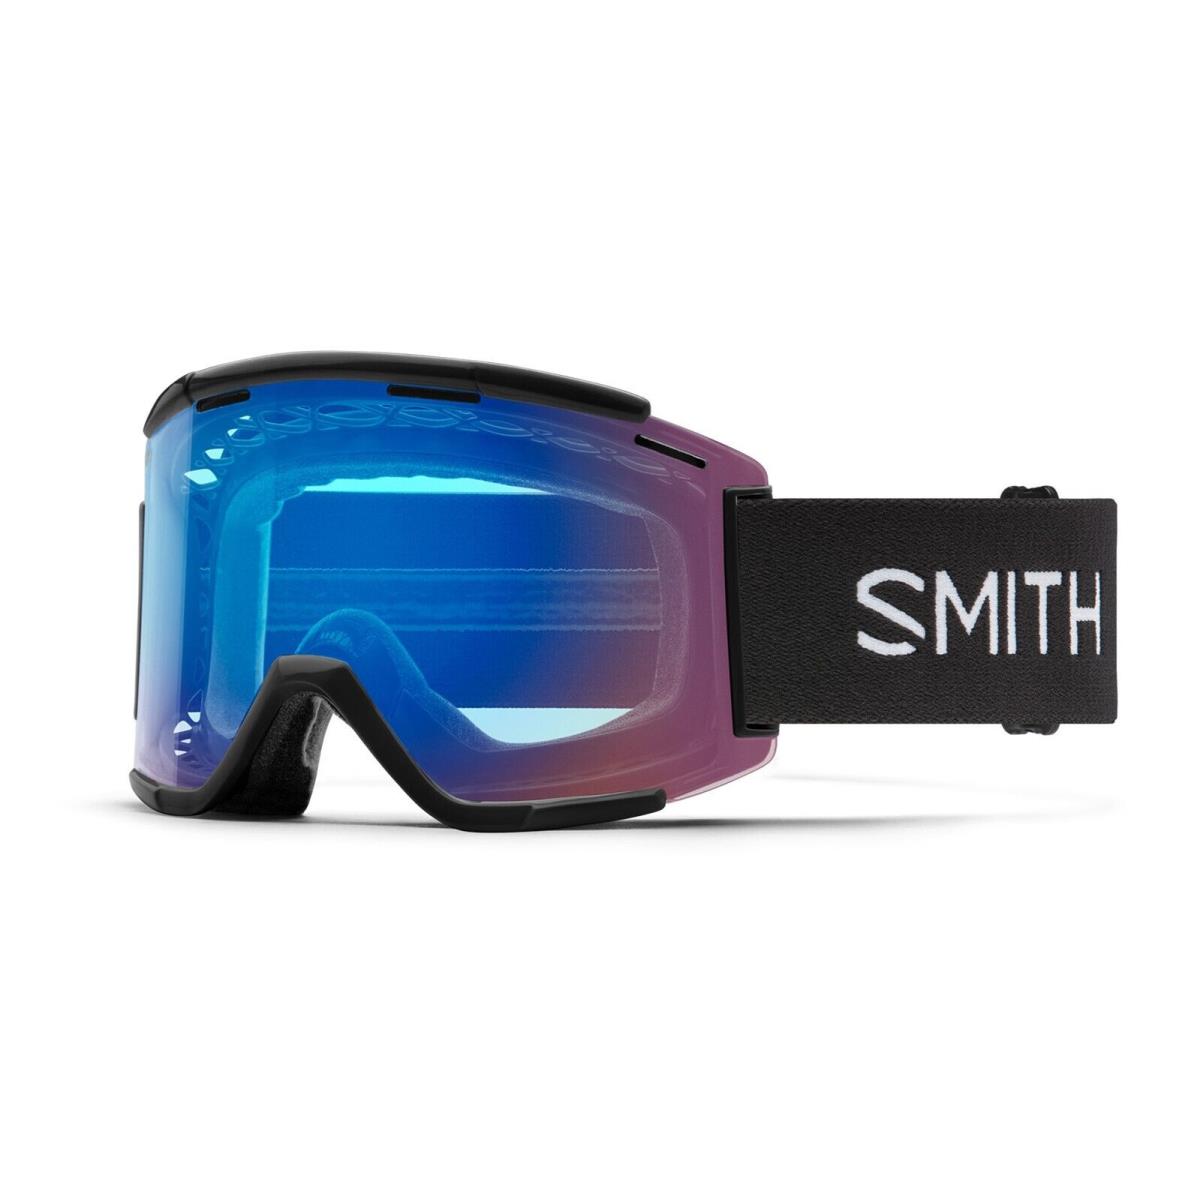 Smith Squad XL Mtb/bike Goggles Black Chromapop Contrast Rose + Bonus Lens